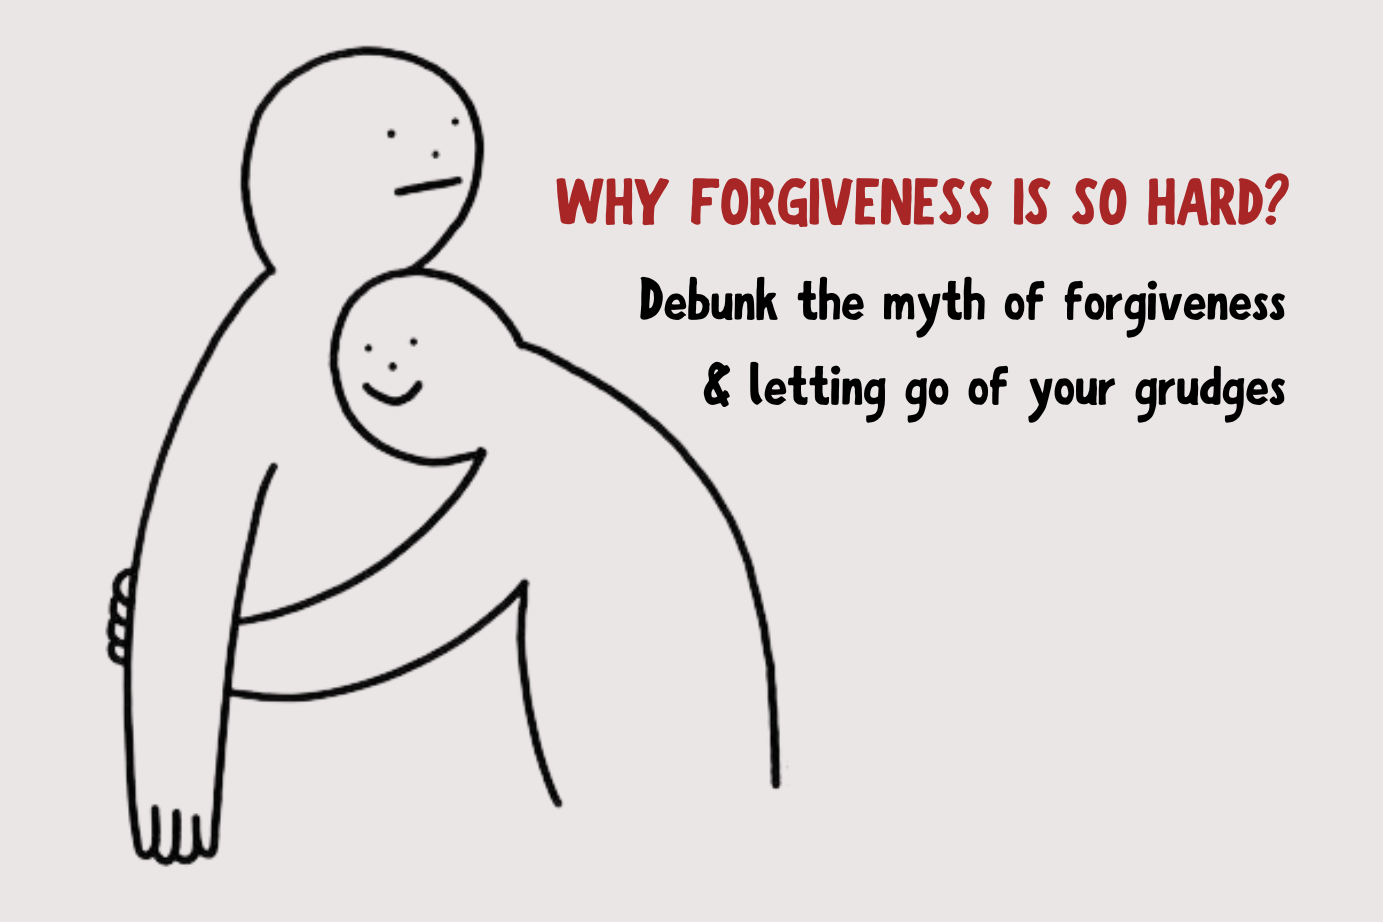 Why Forgiveness is so Hard?